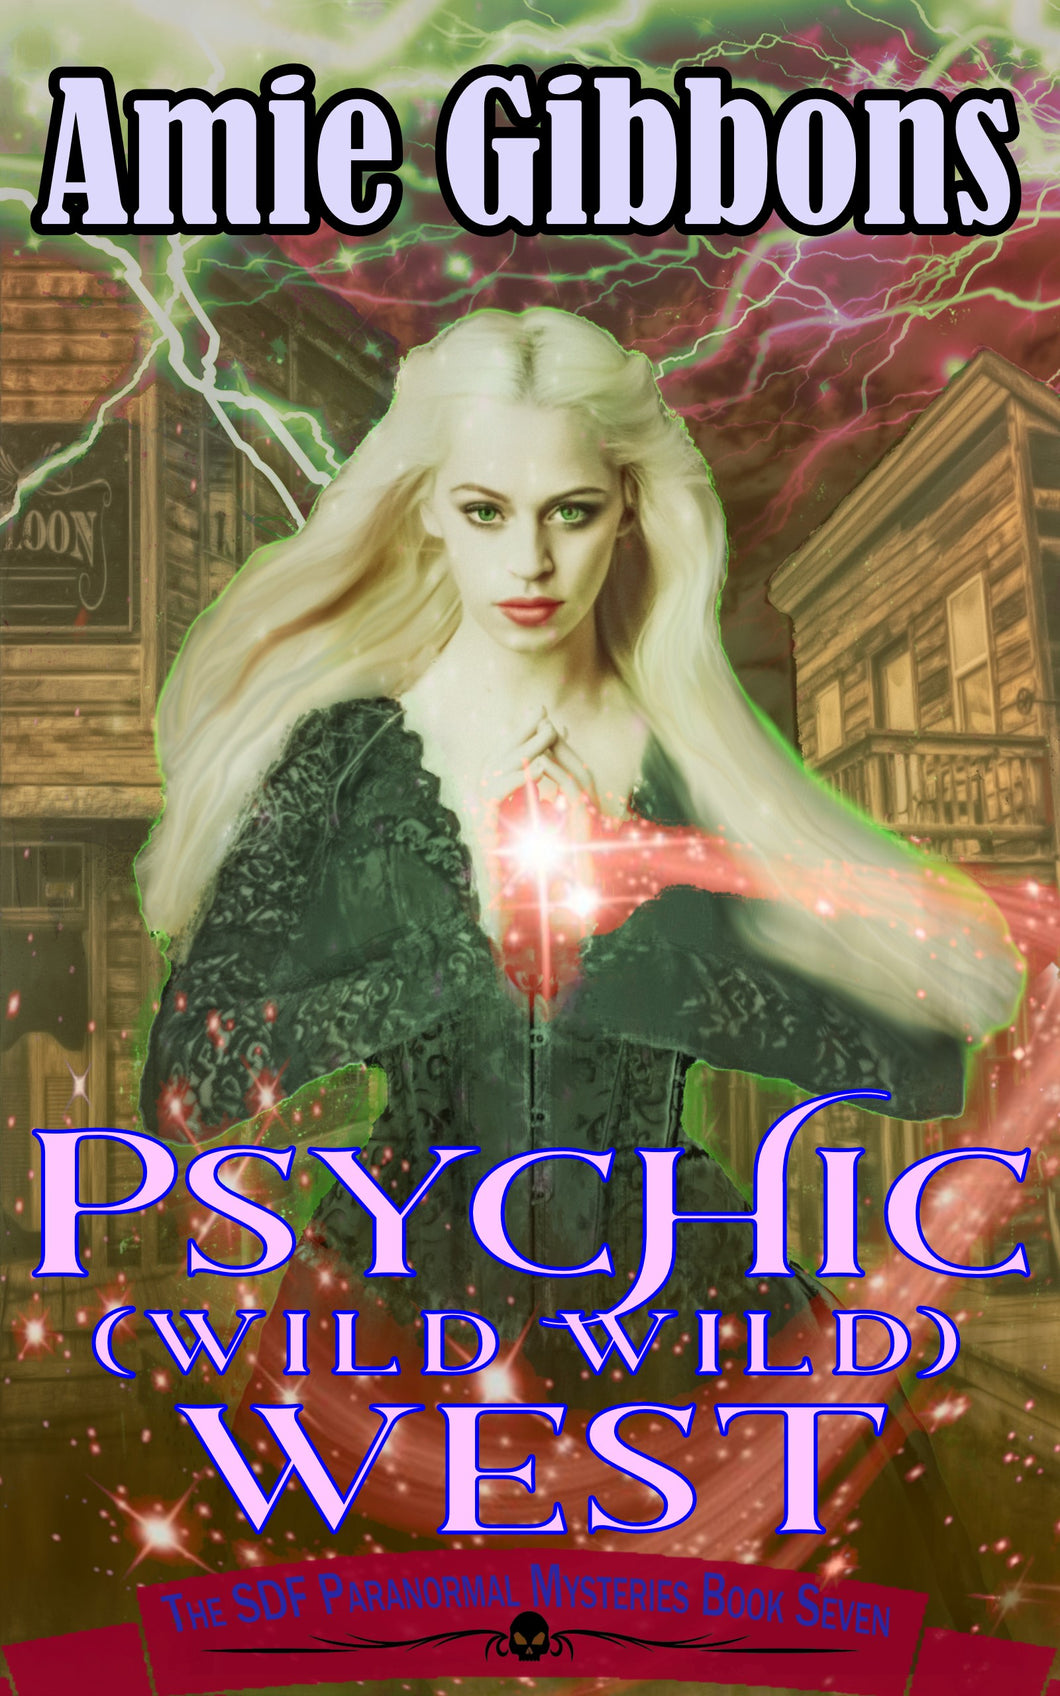 Psychic (Wild Wild) West  SDF 7